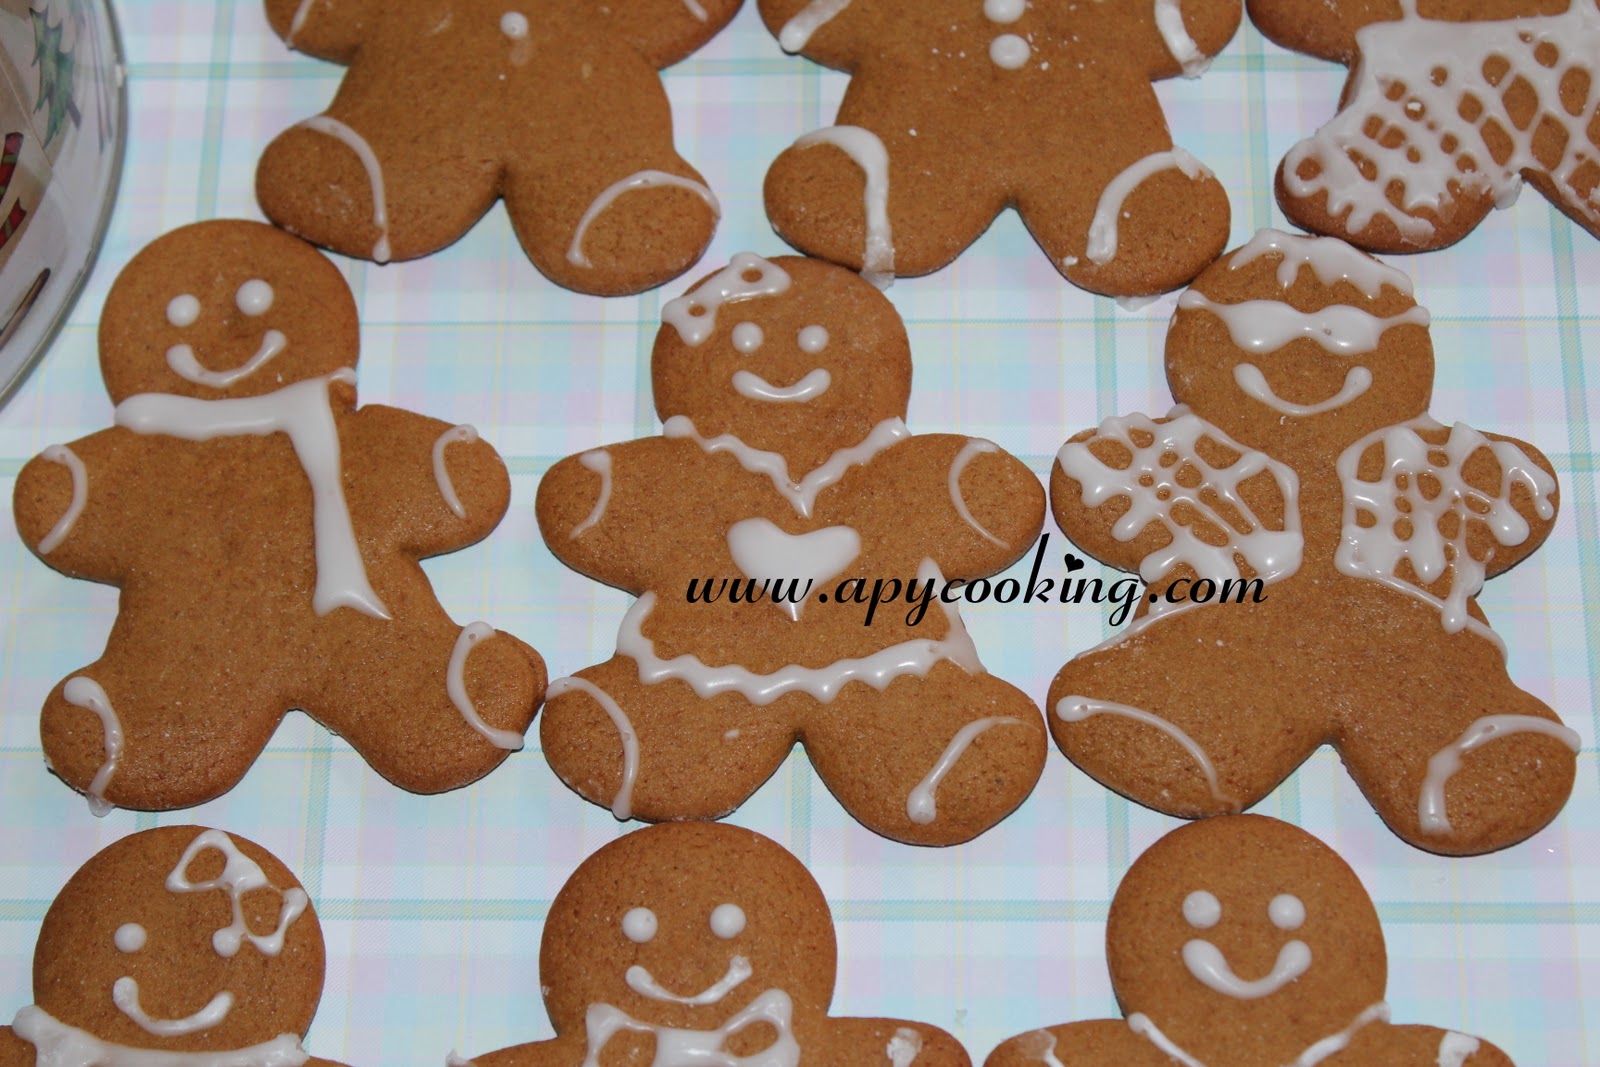 Apy Cooking: Gingerbread Men / Gingerbread Cookies